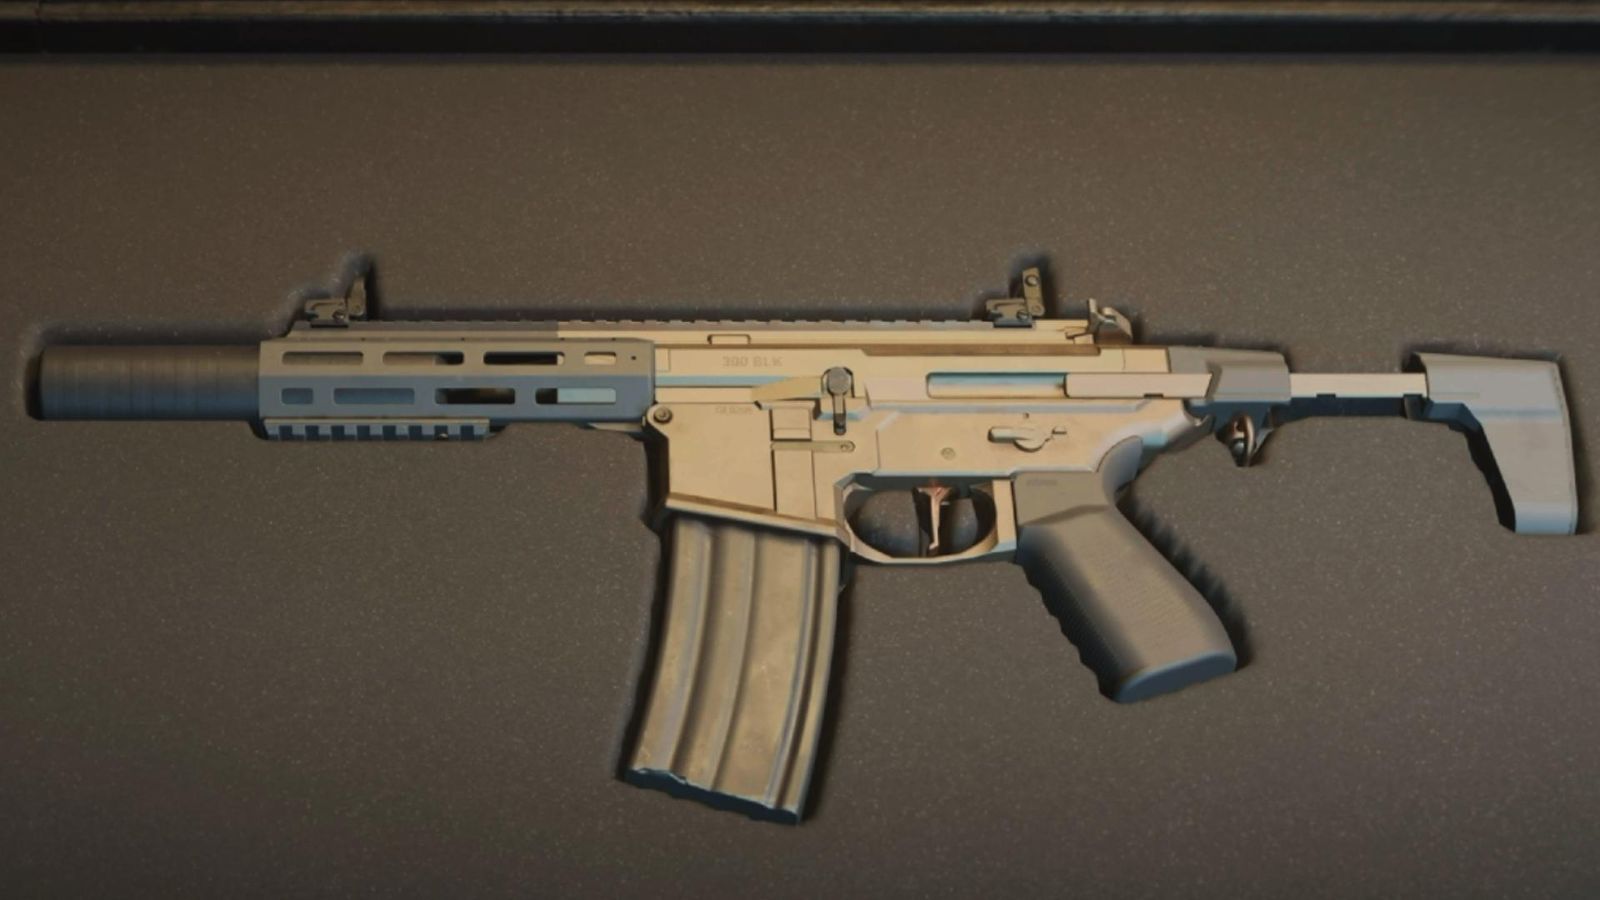 Modern Warfare 3 Chimera loadout - Chimera rifle in case